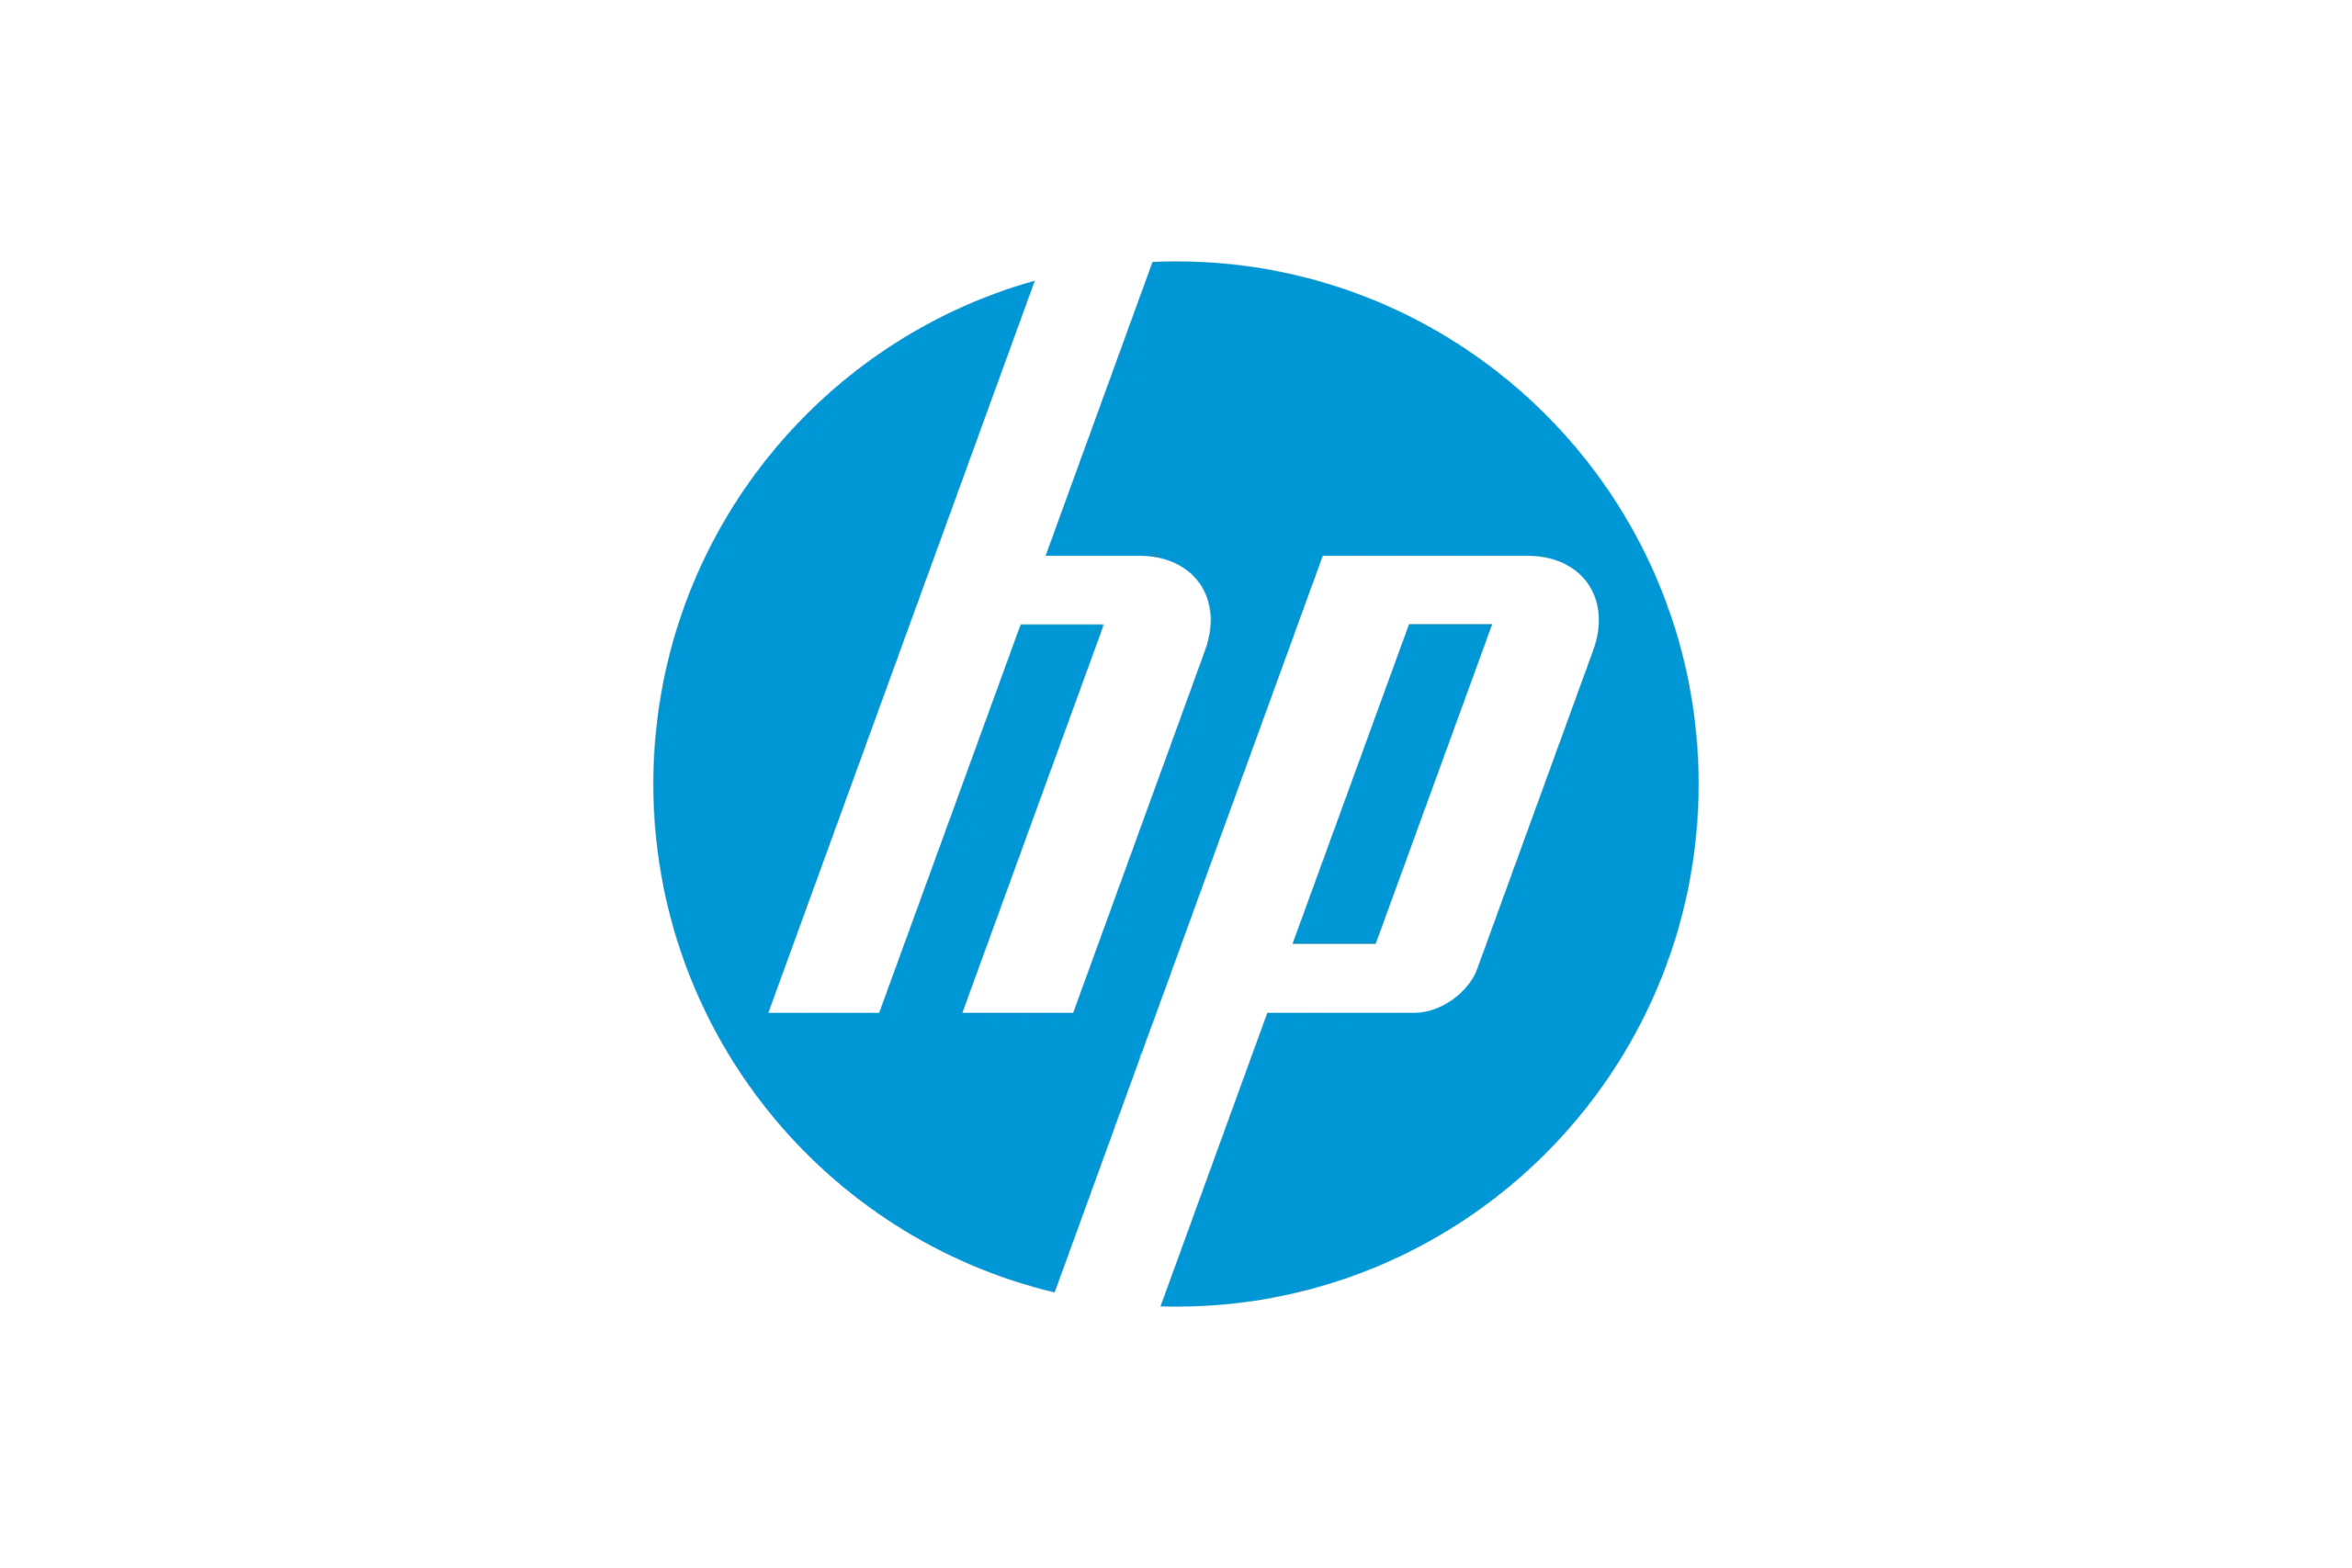 hewlett packard downloads - How do I download software on my HP